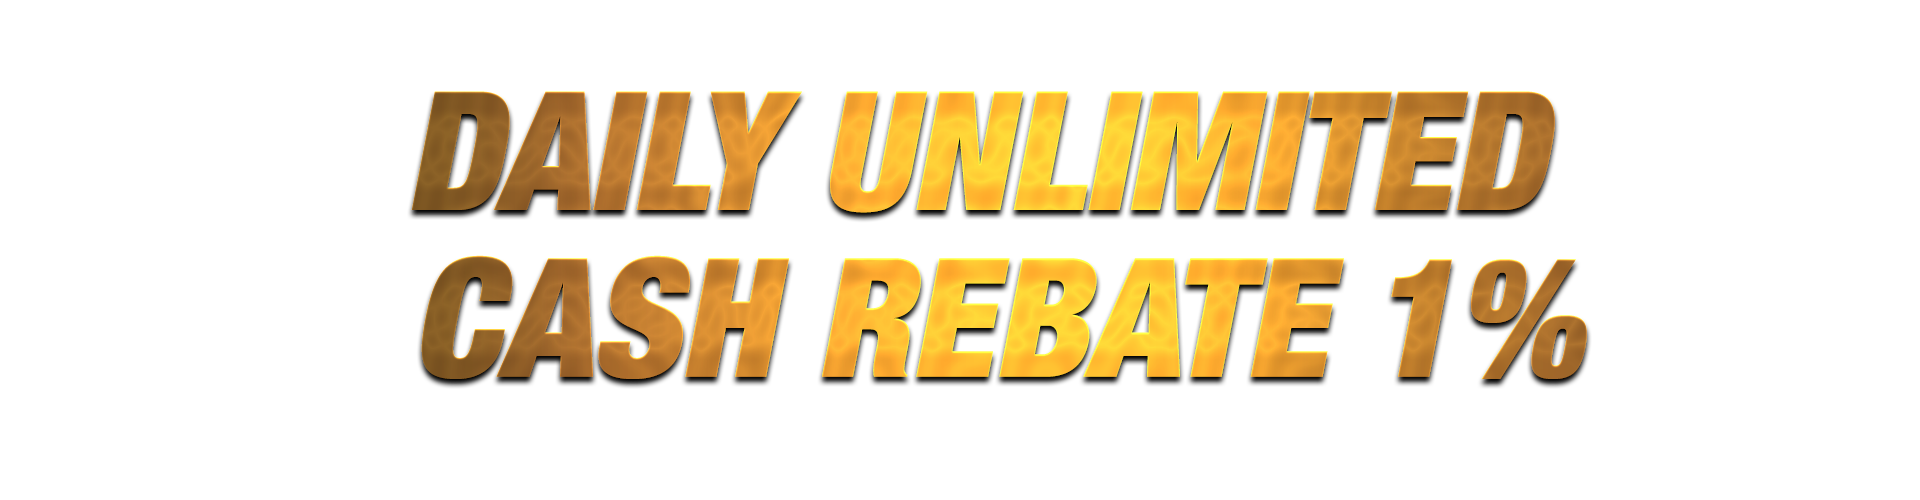 Daily-Unlimited-Cash-Rebate-1%